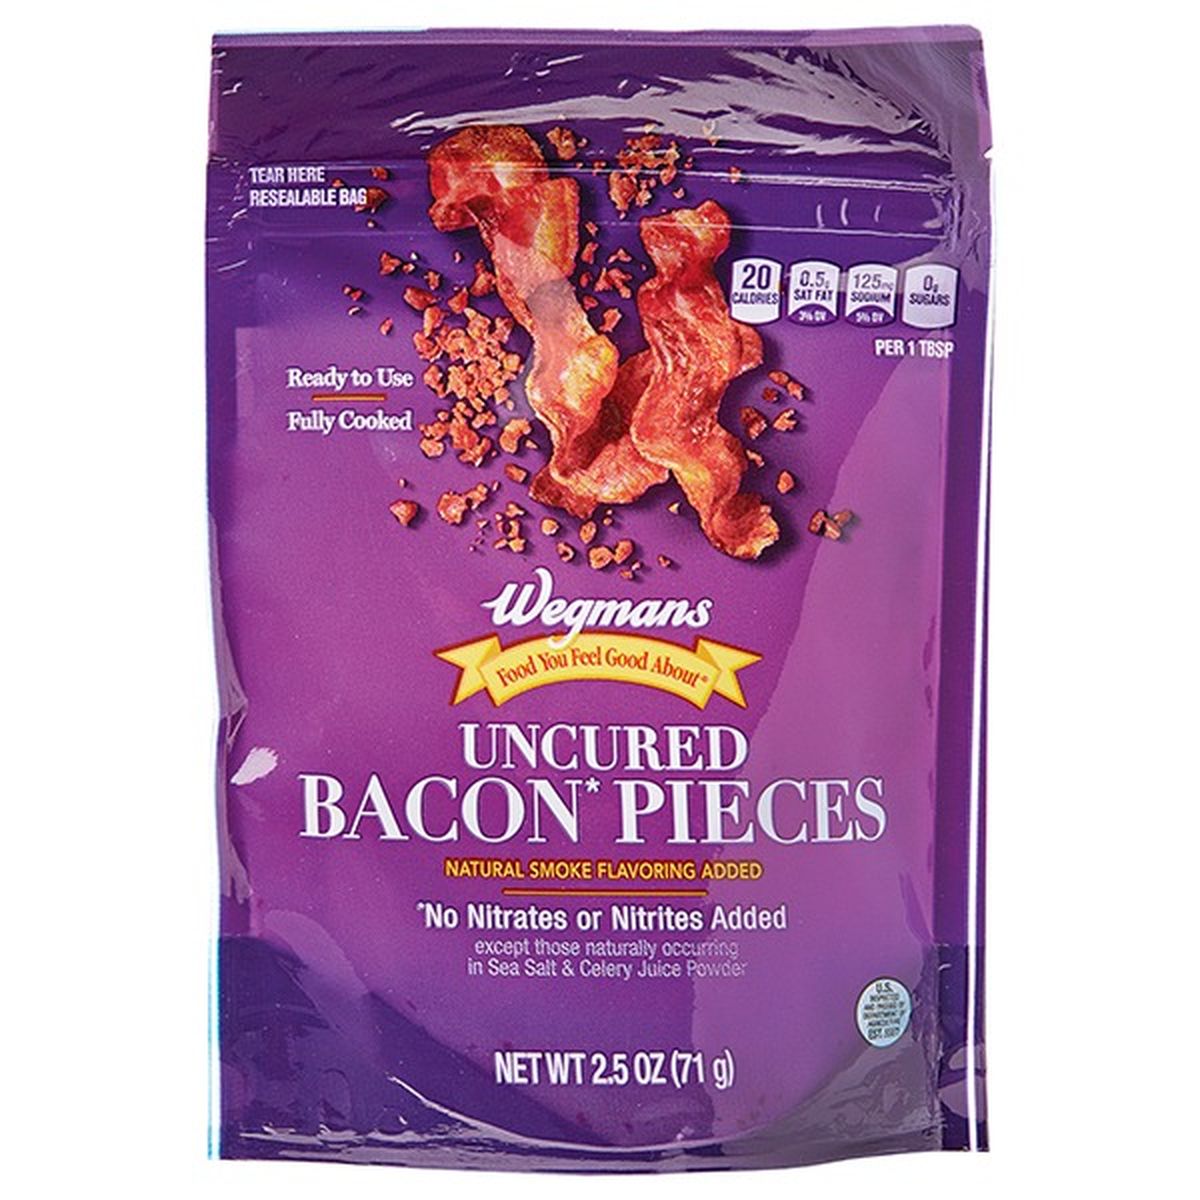 Calories in Wegmans Bacon* Pieces, Uncured